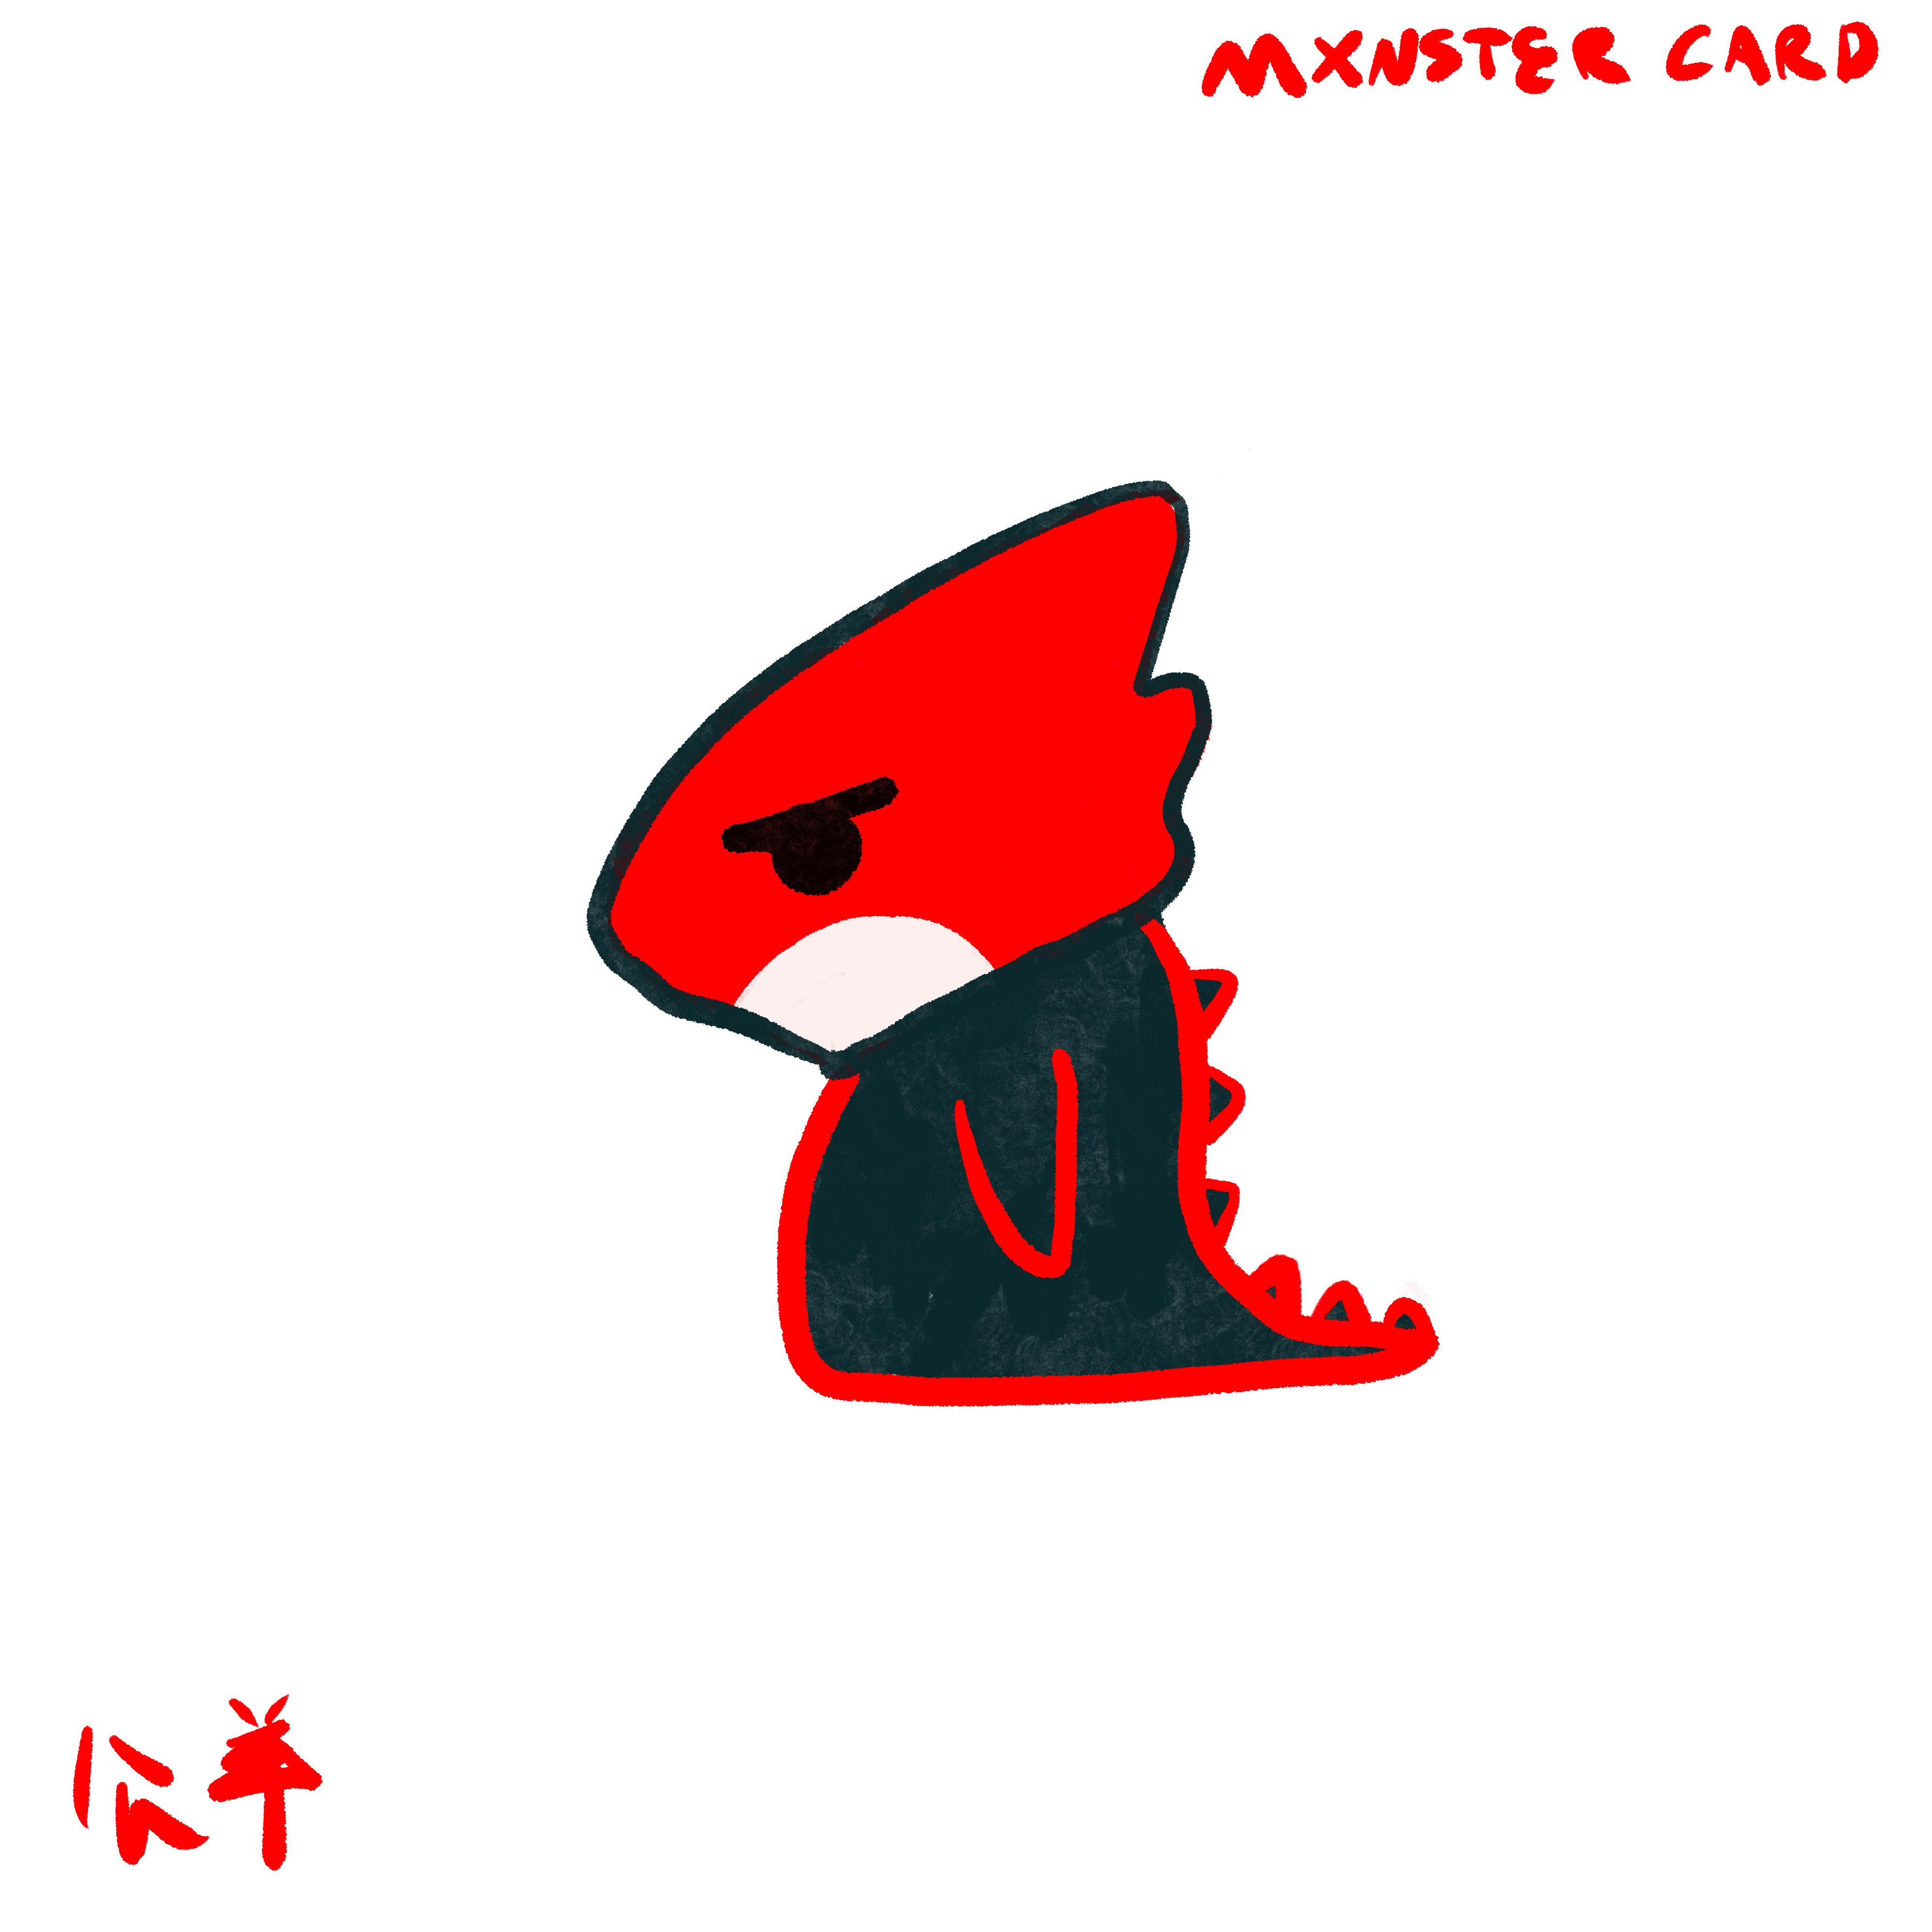 Mxnster Card 12